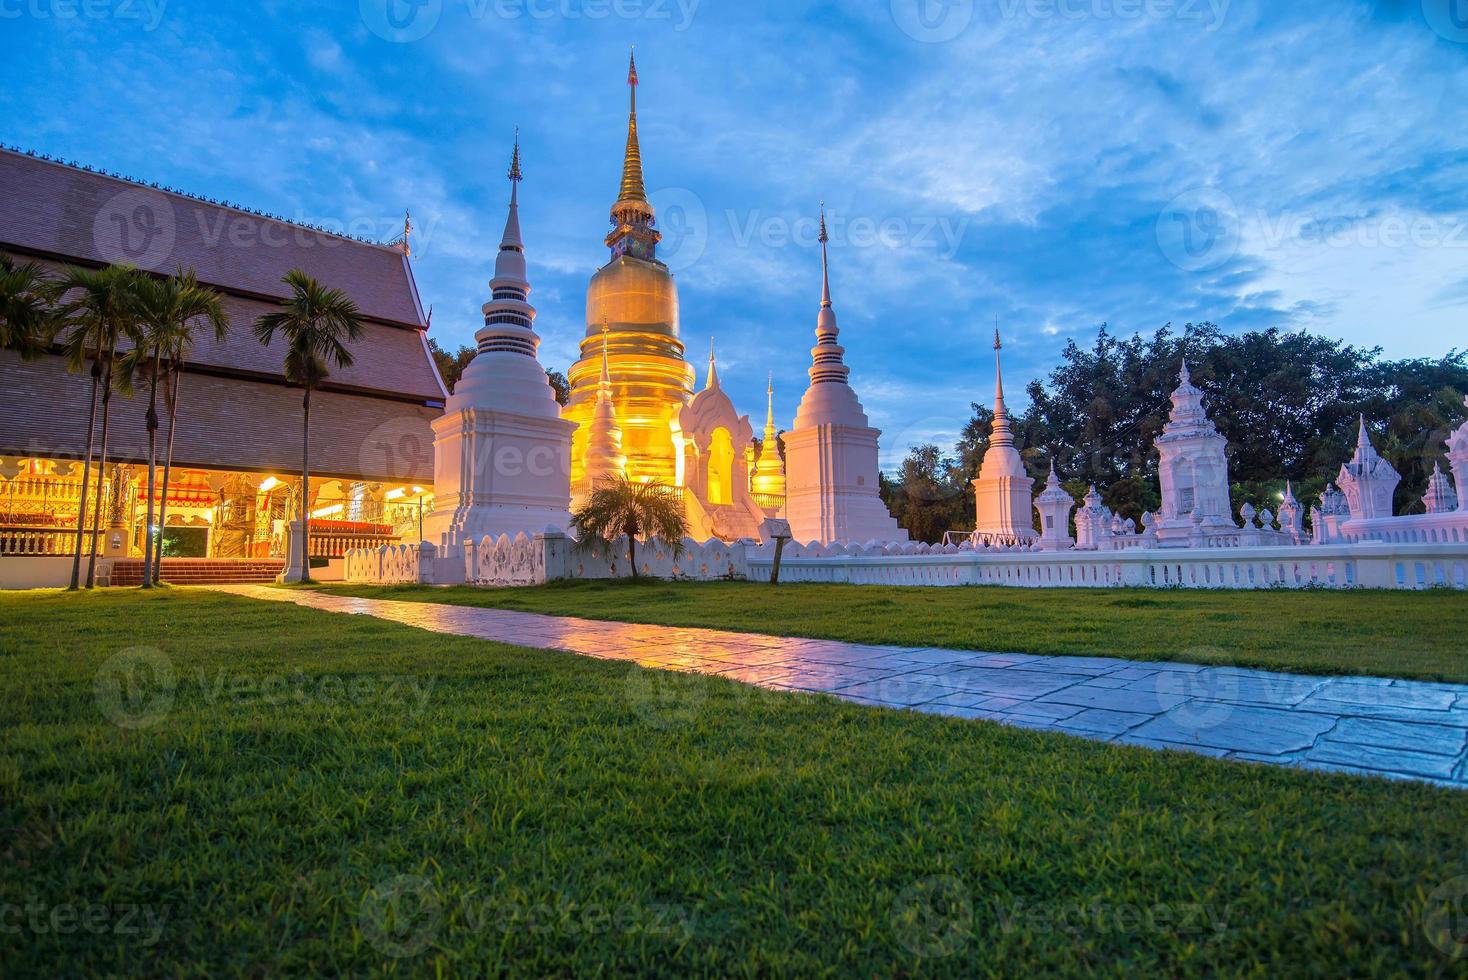 twilight at wat suan dok beautiful temple in chiangmai photo